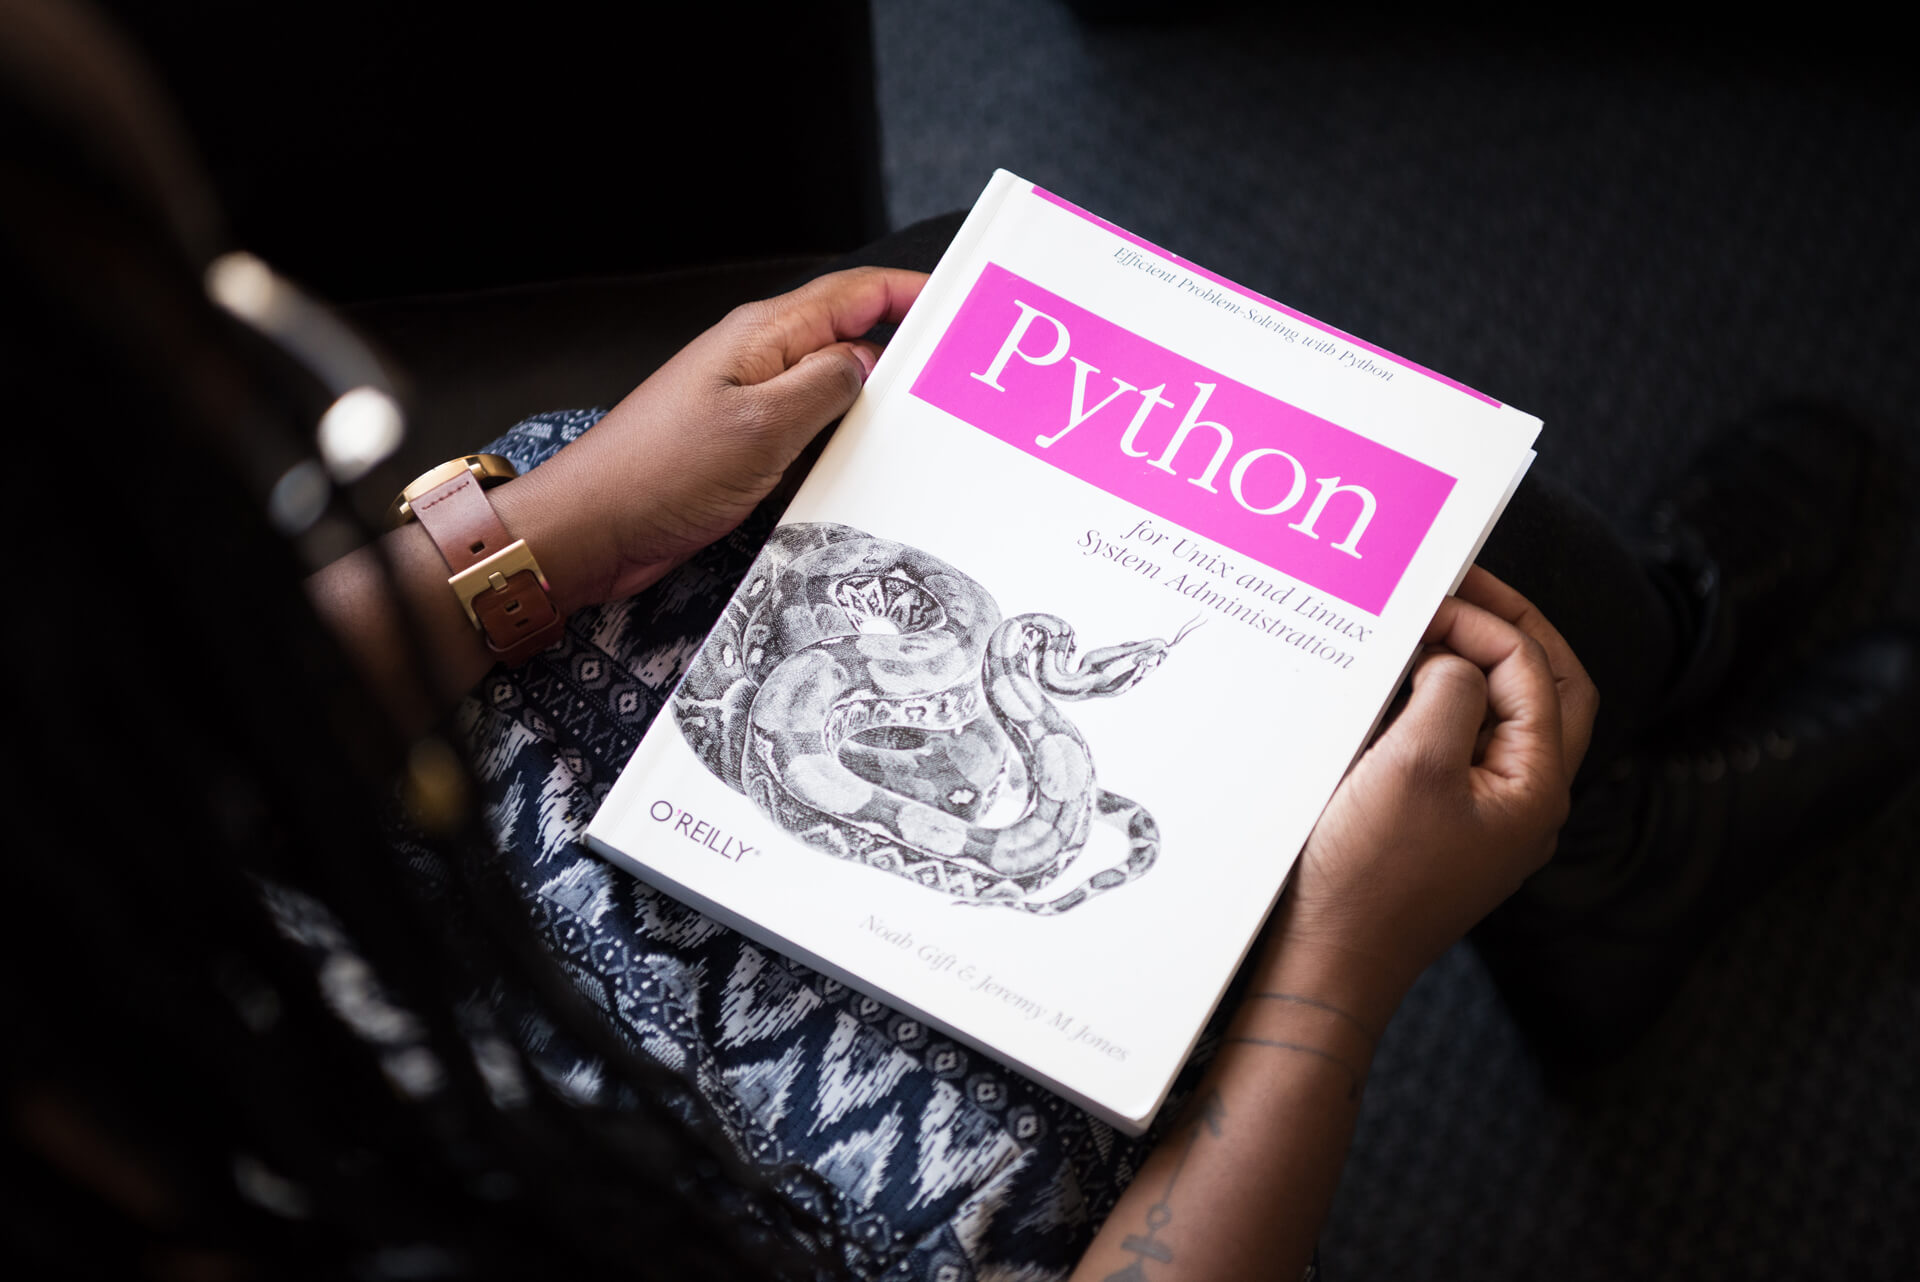 Learn Python – Interactive Python